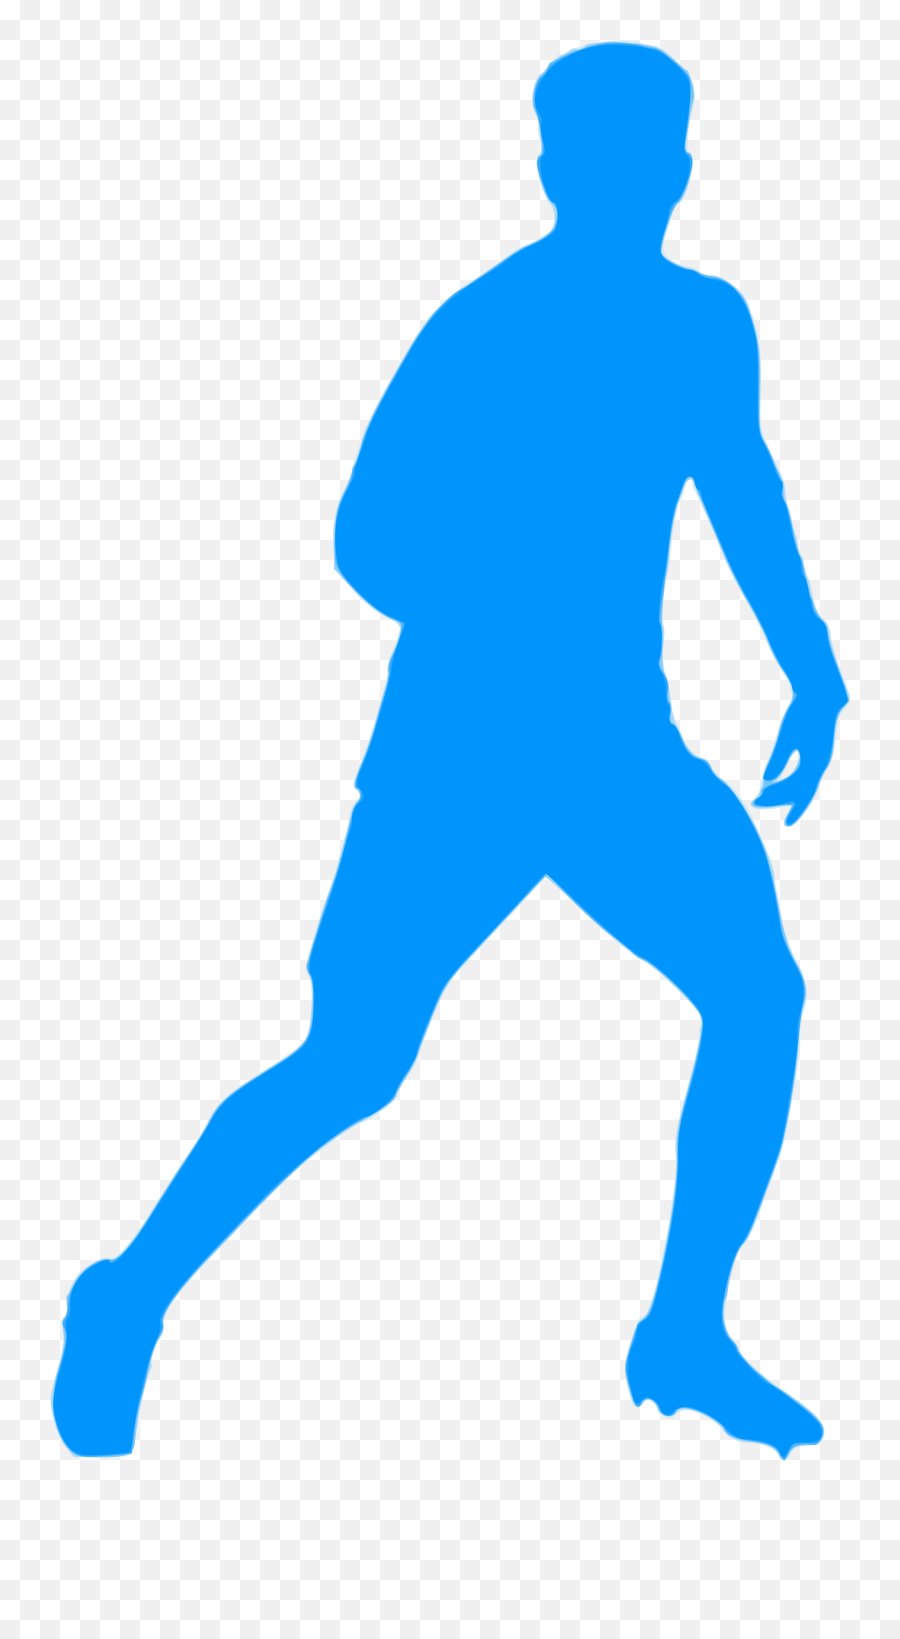 Silhouette Football 15 Clipart - Blue Football Player Silhouette Png,Football Player Silhouette Png